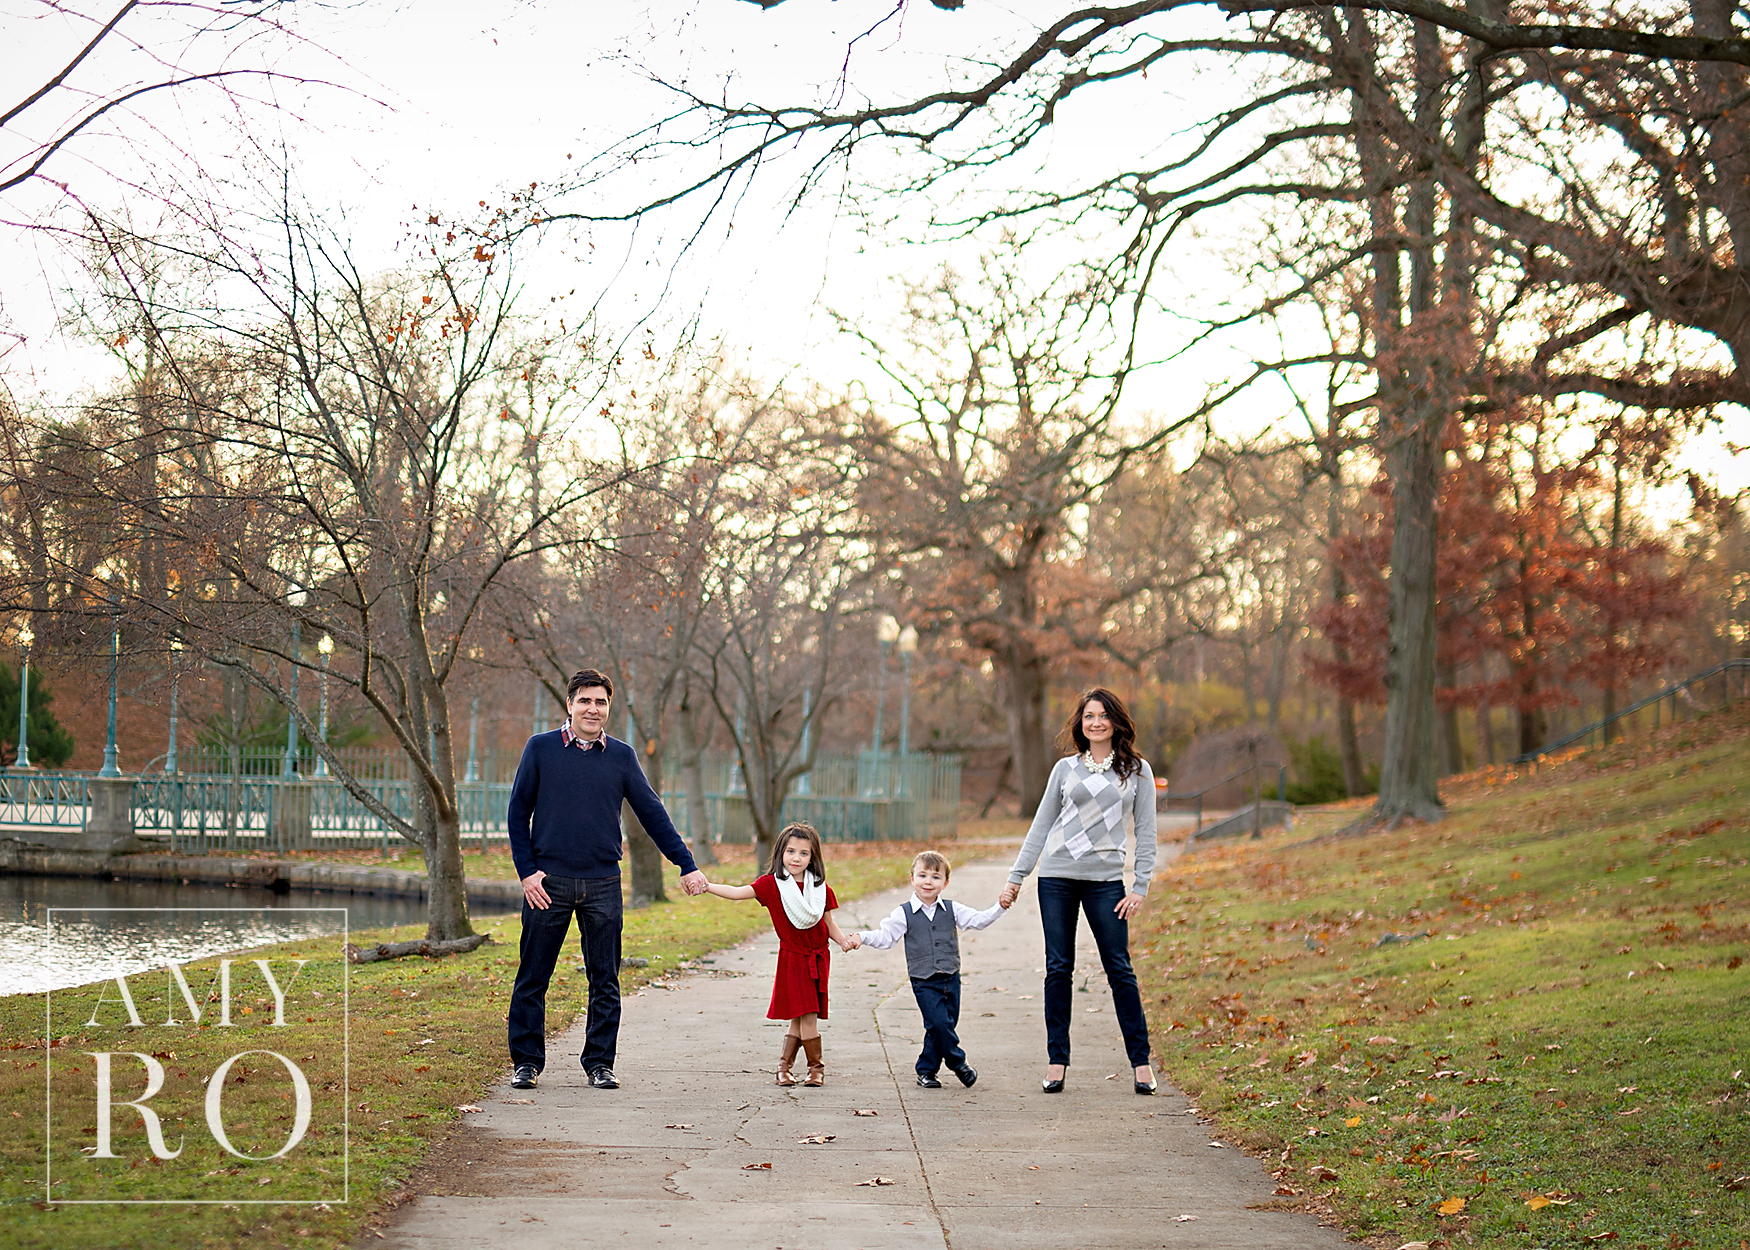 Family portrait in Roger Williams park on sidewalk standing holding hands.